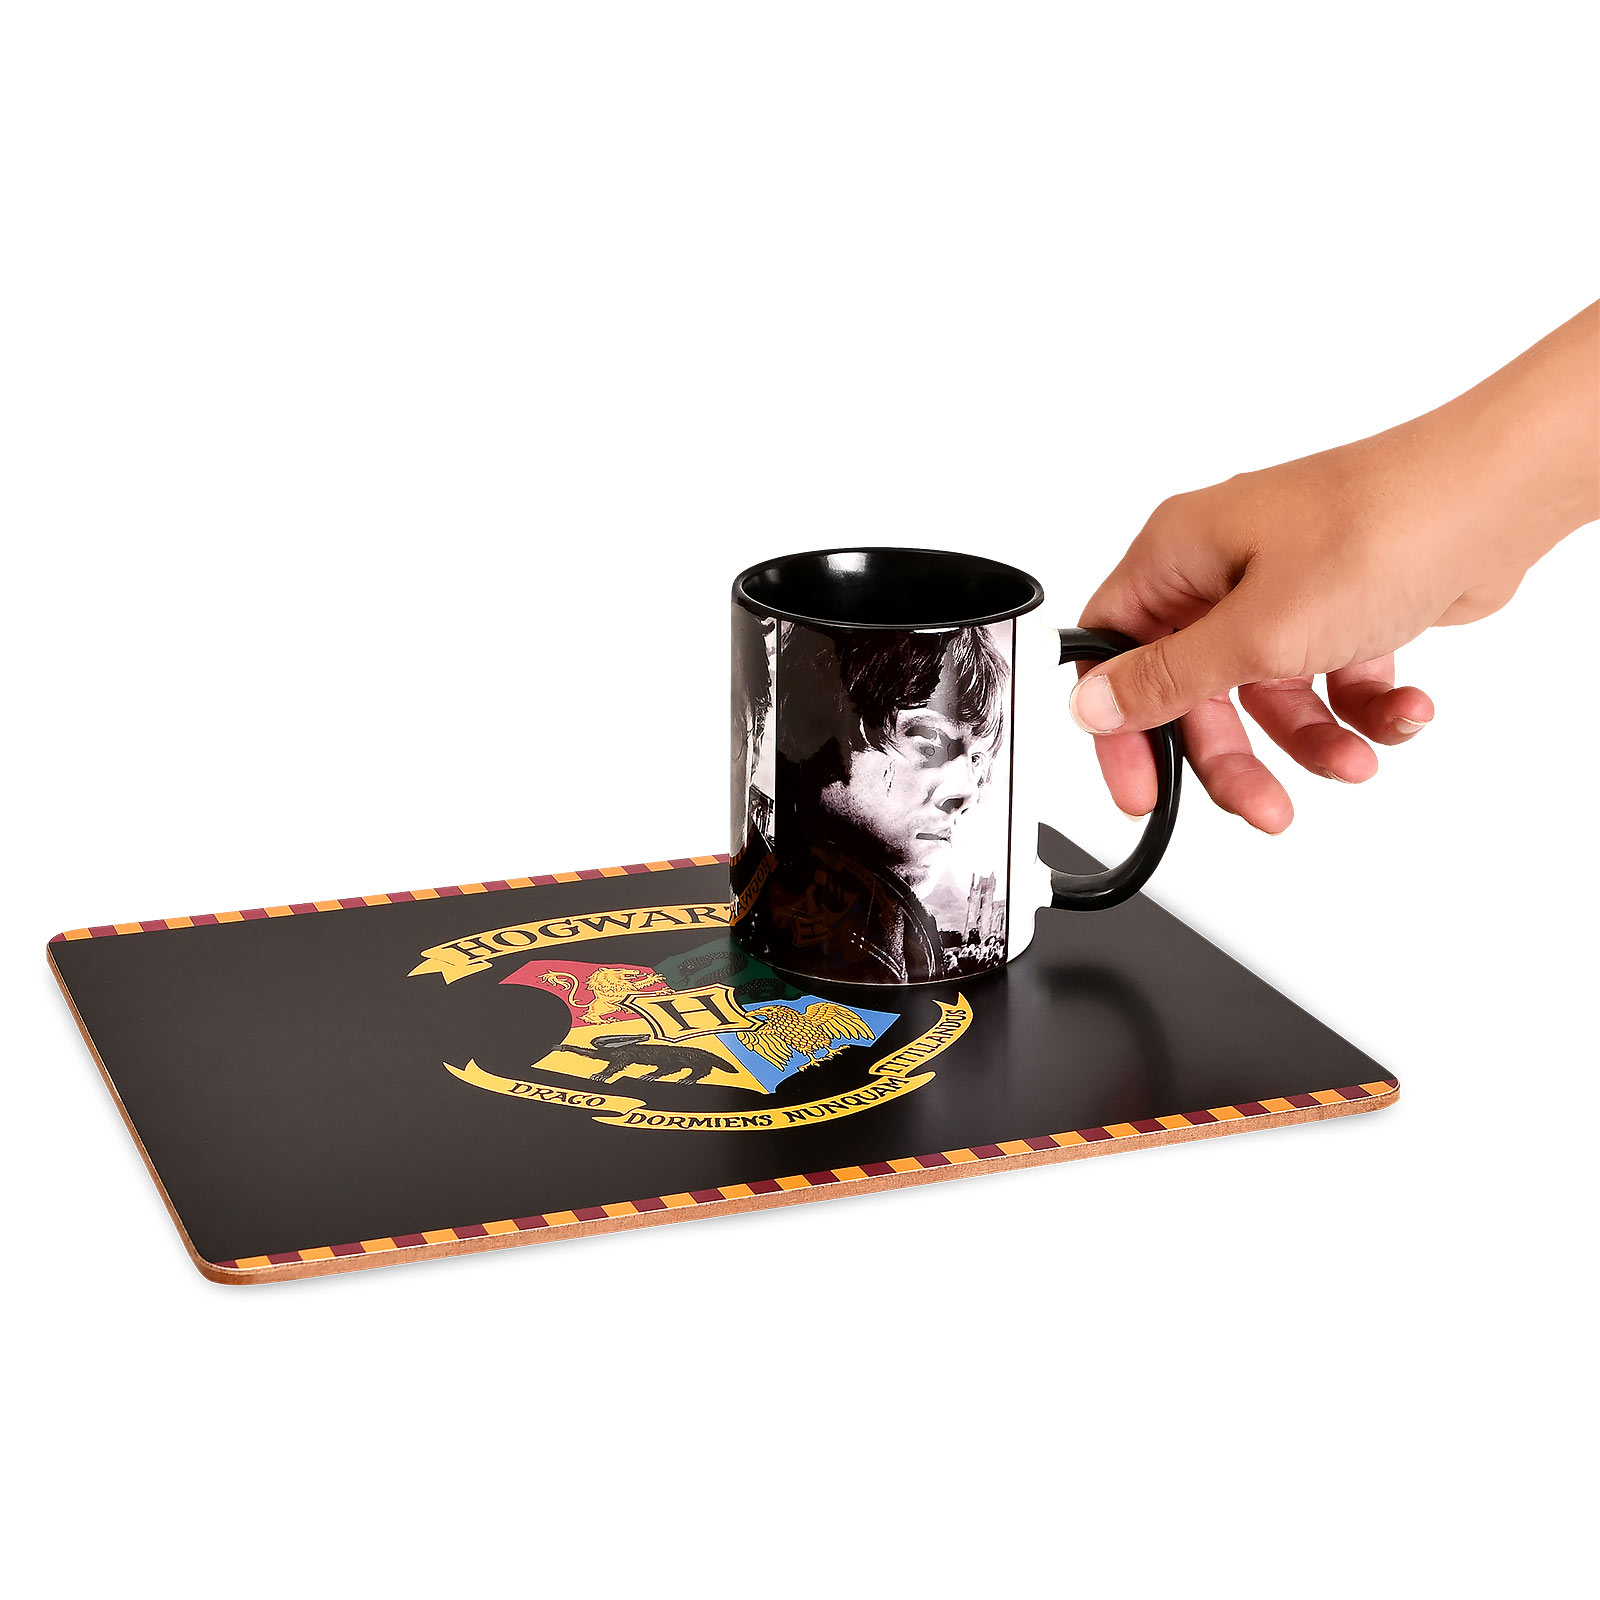 Harry Potter - Hogwarts Wappen Tischset 4-teilig